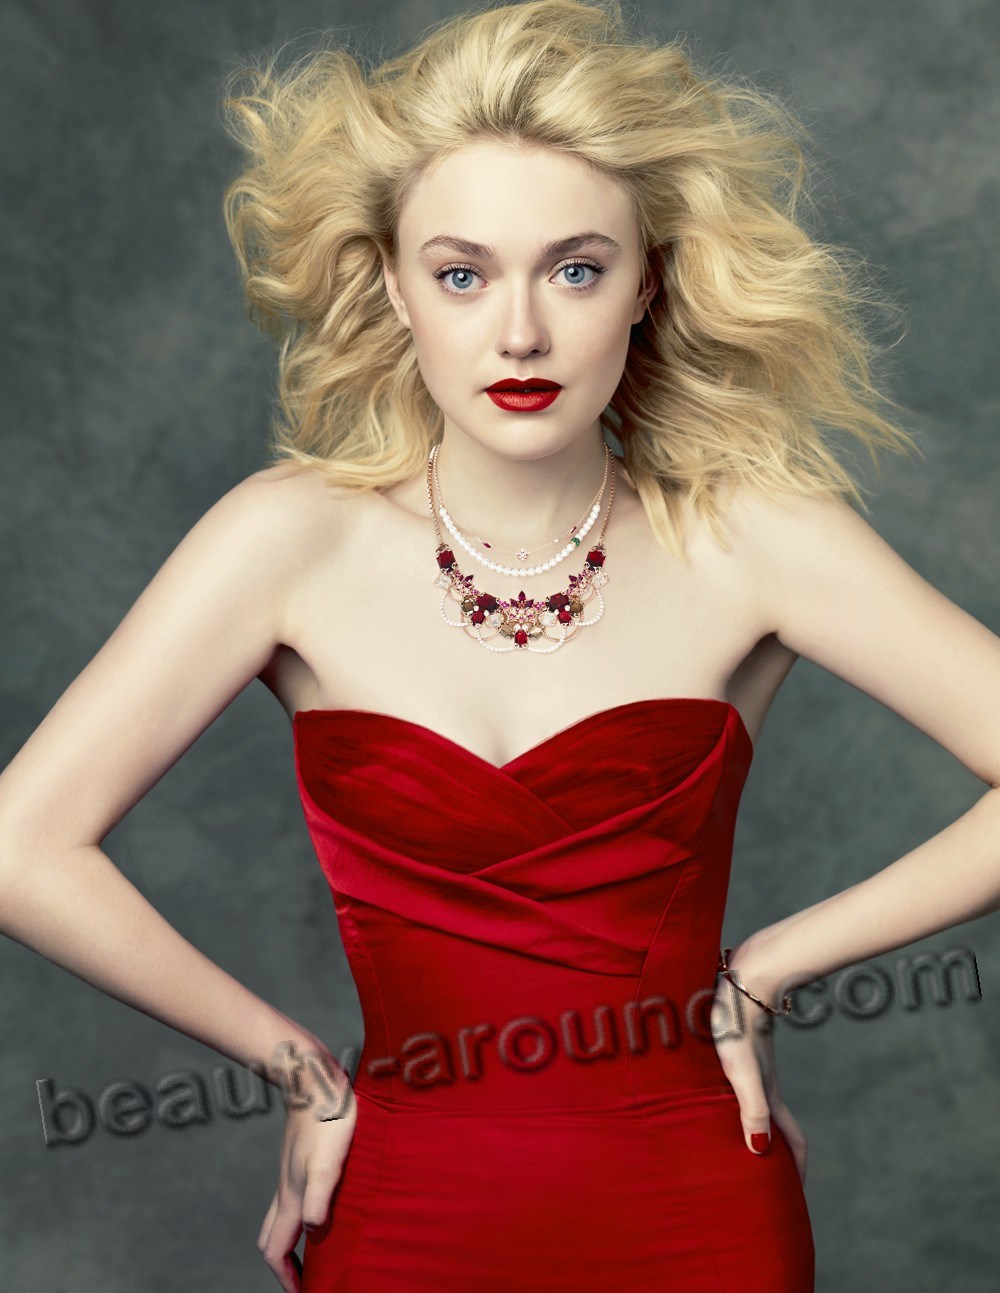 Dakota Fanning in a red dress photo